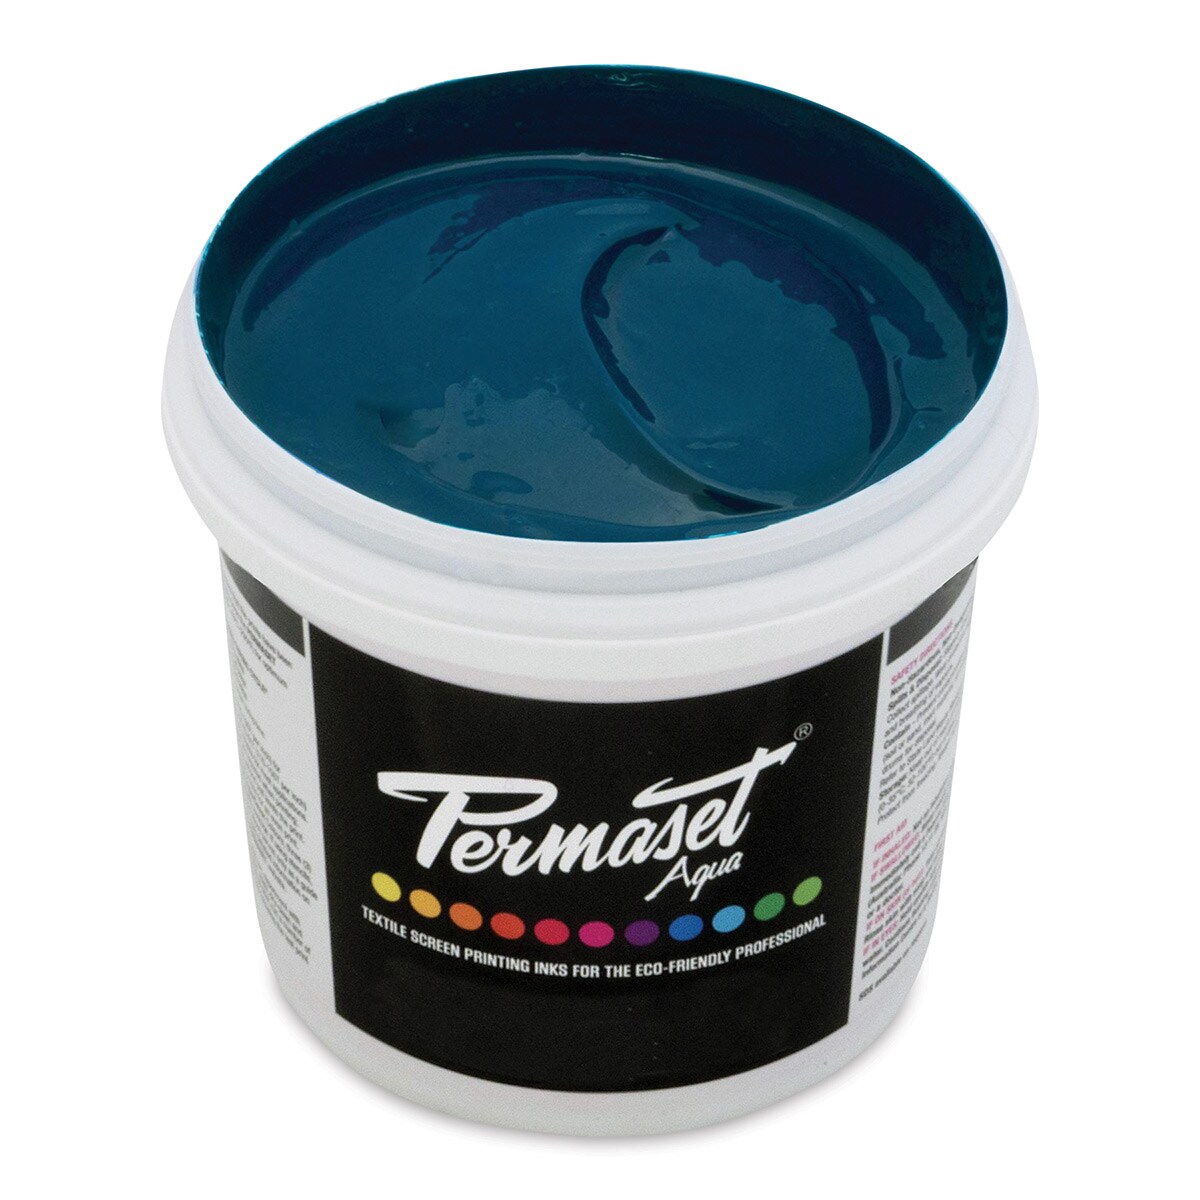 Permaset Aqua Fabric Ink - Turquoise, Liter | Michaels